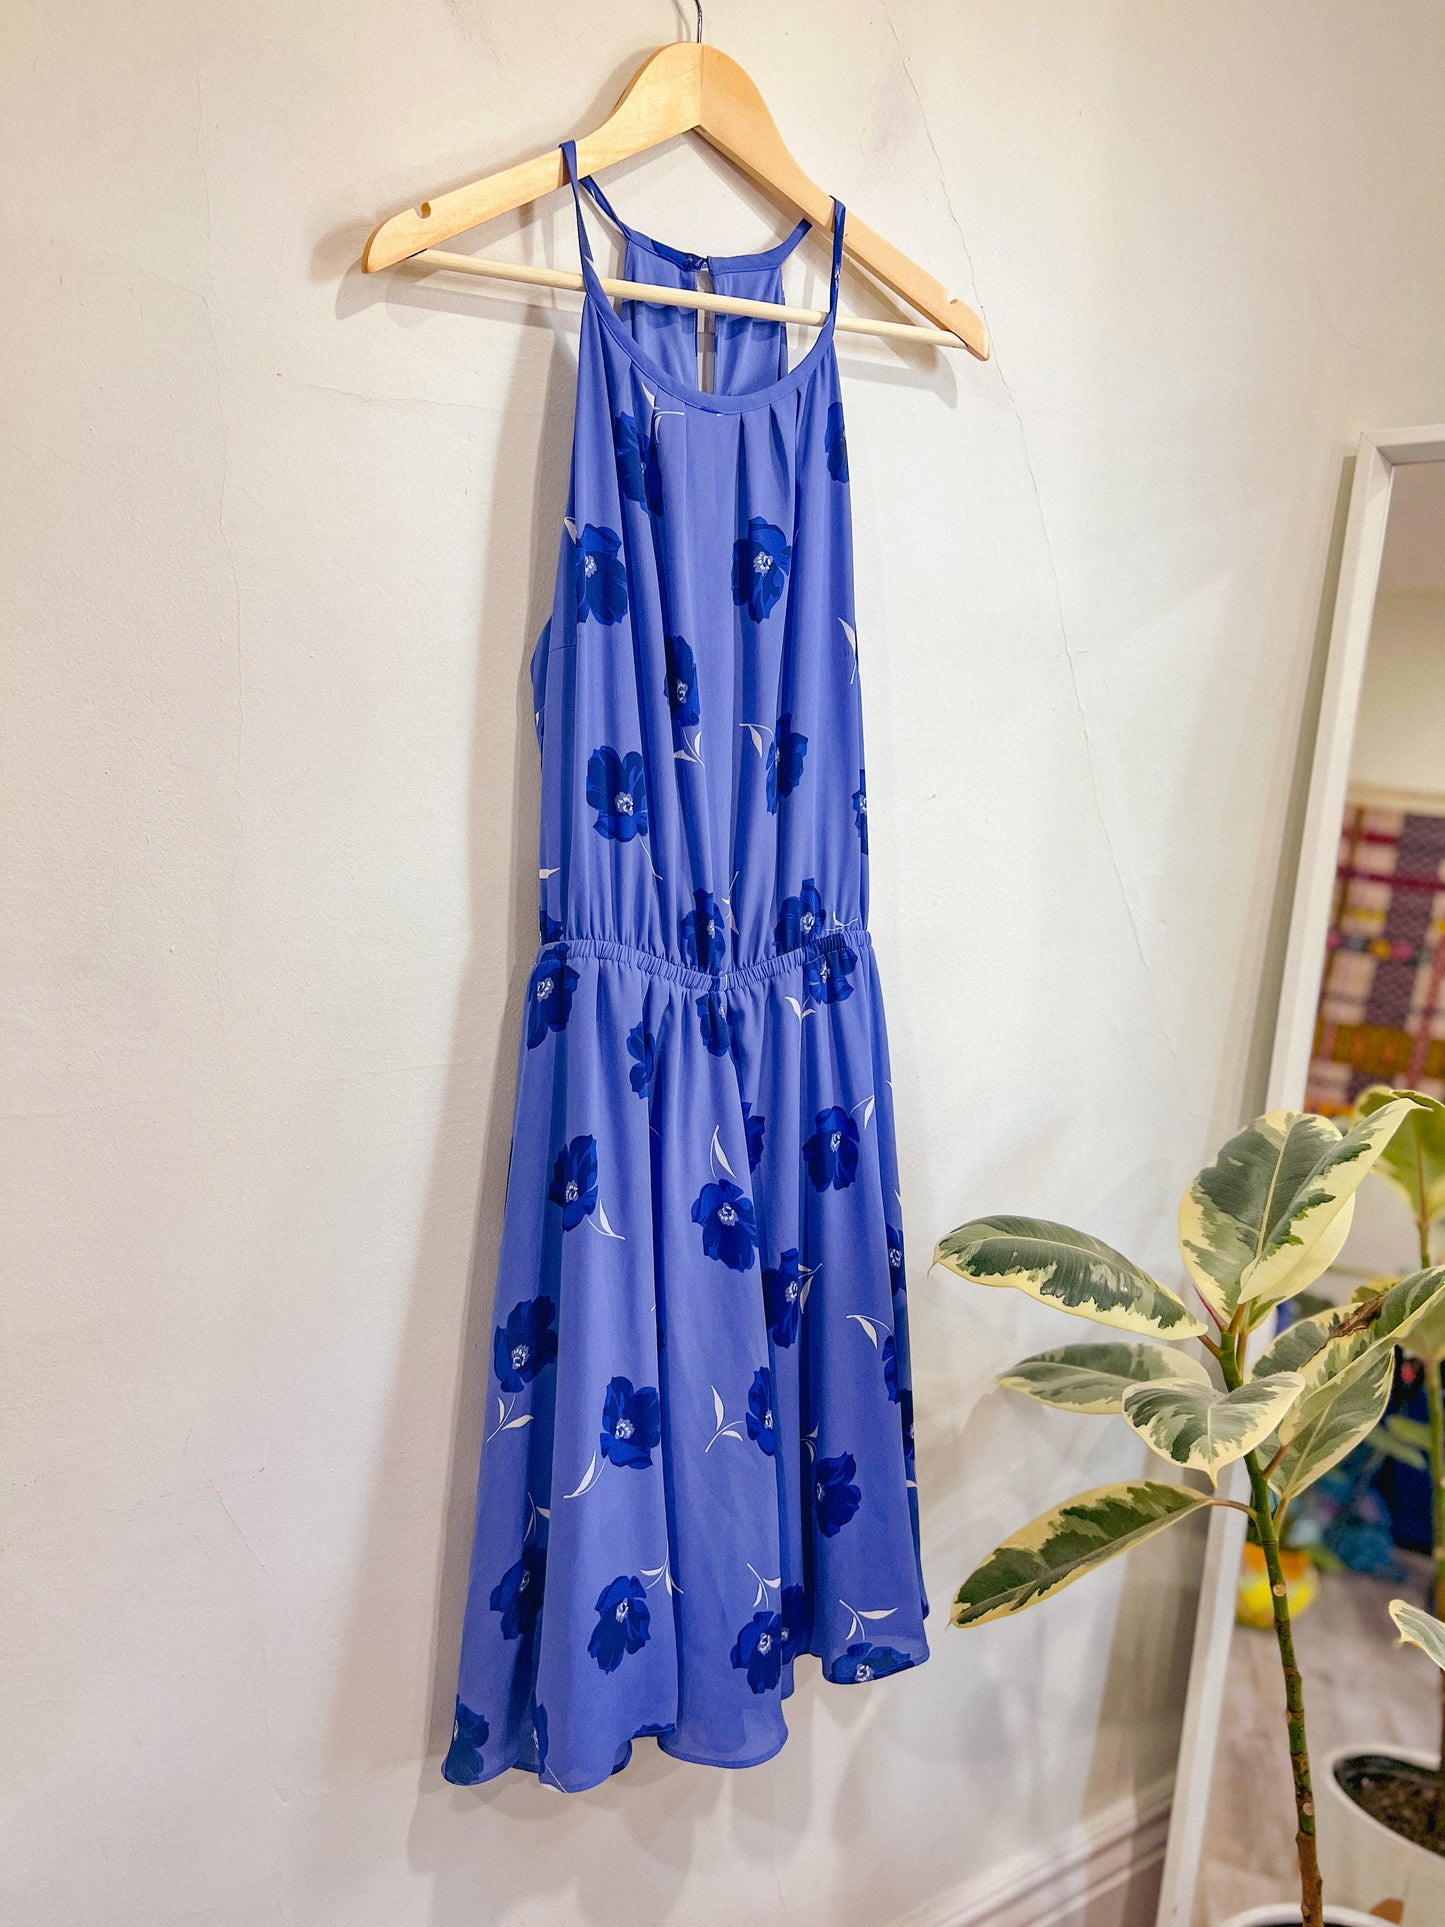 Banana Republic Blue Floral Halter Neck Dress (Size M)